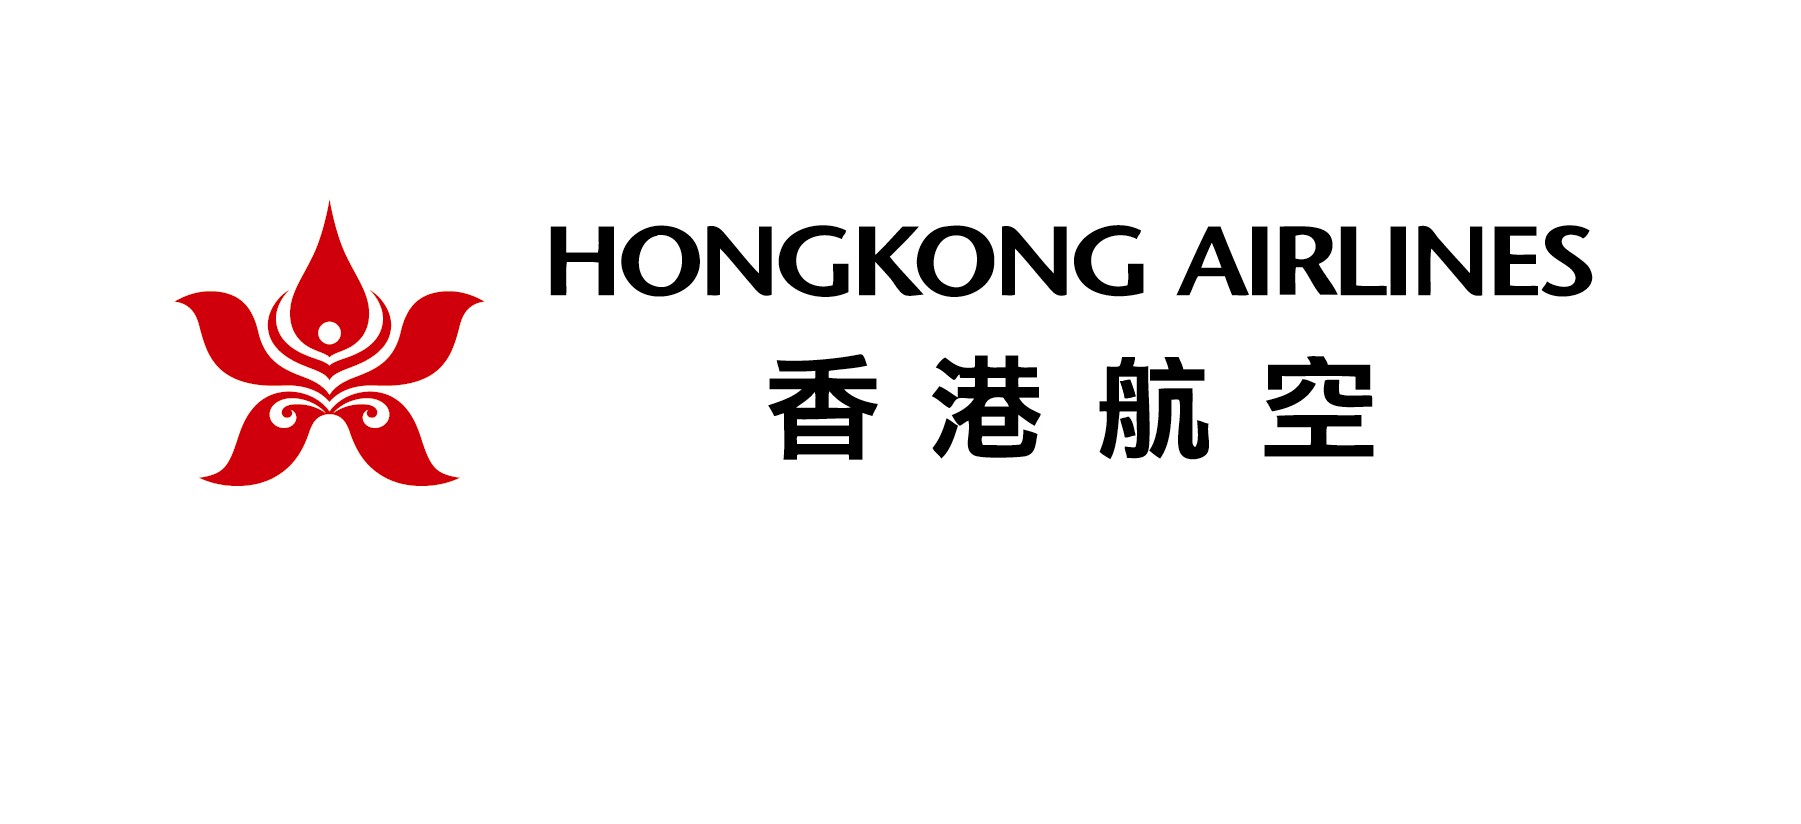 . Hdpng.com 73204Afc657151D592Bfee53Bb20Ef49.jpg Hdpng.com  - Hong Kong Airlines, Transparent background PNG HD thumbnail